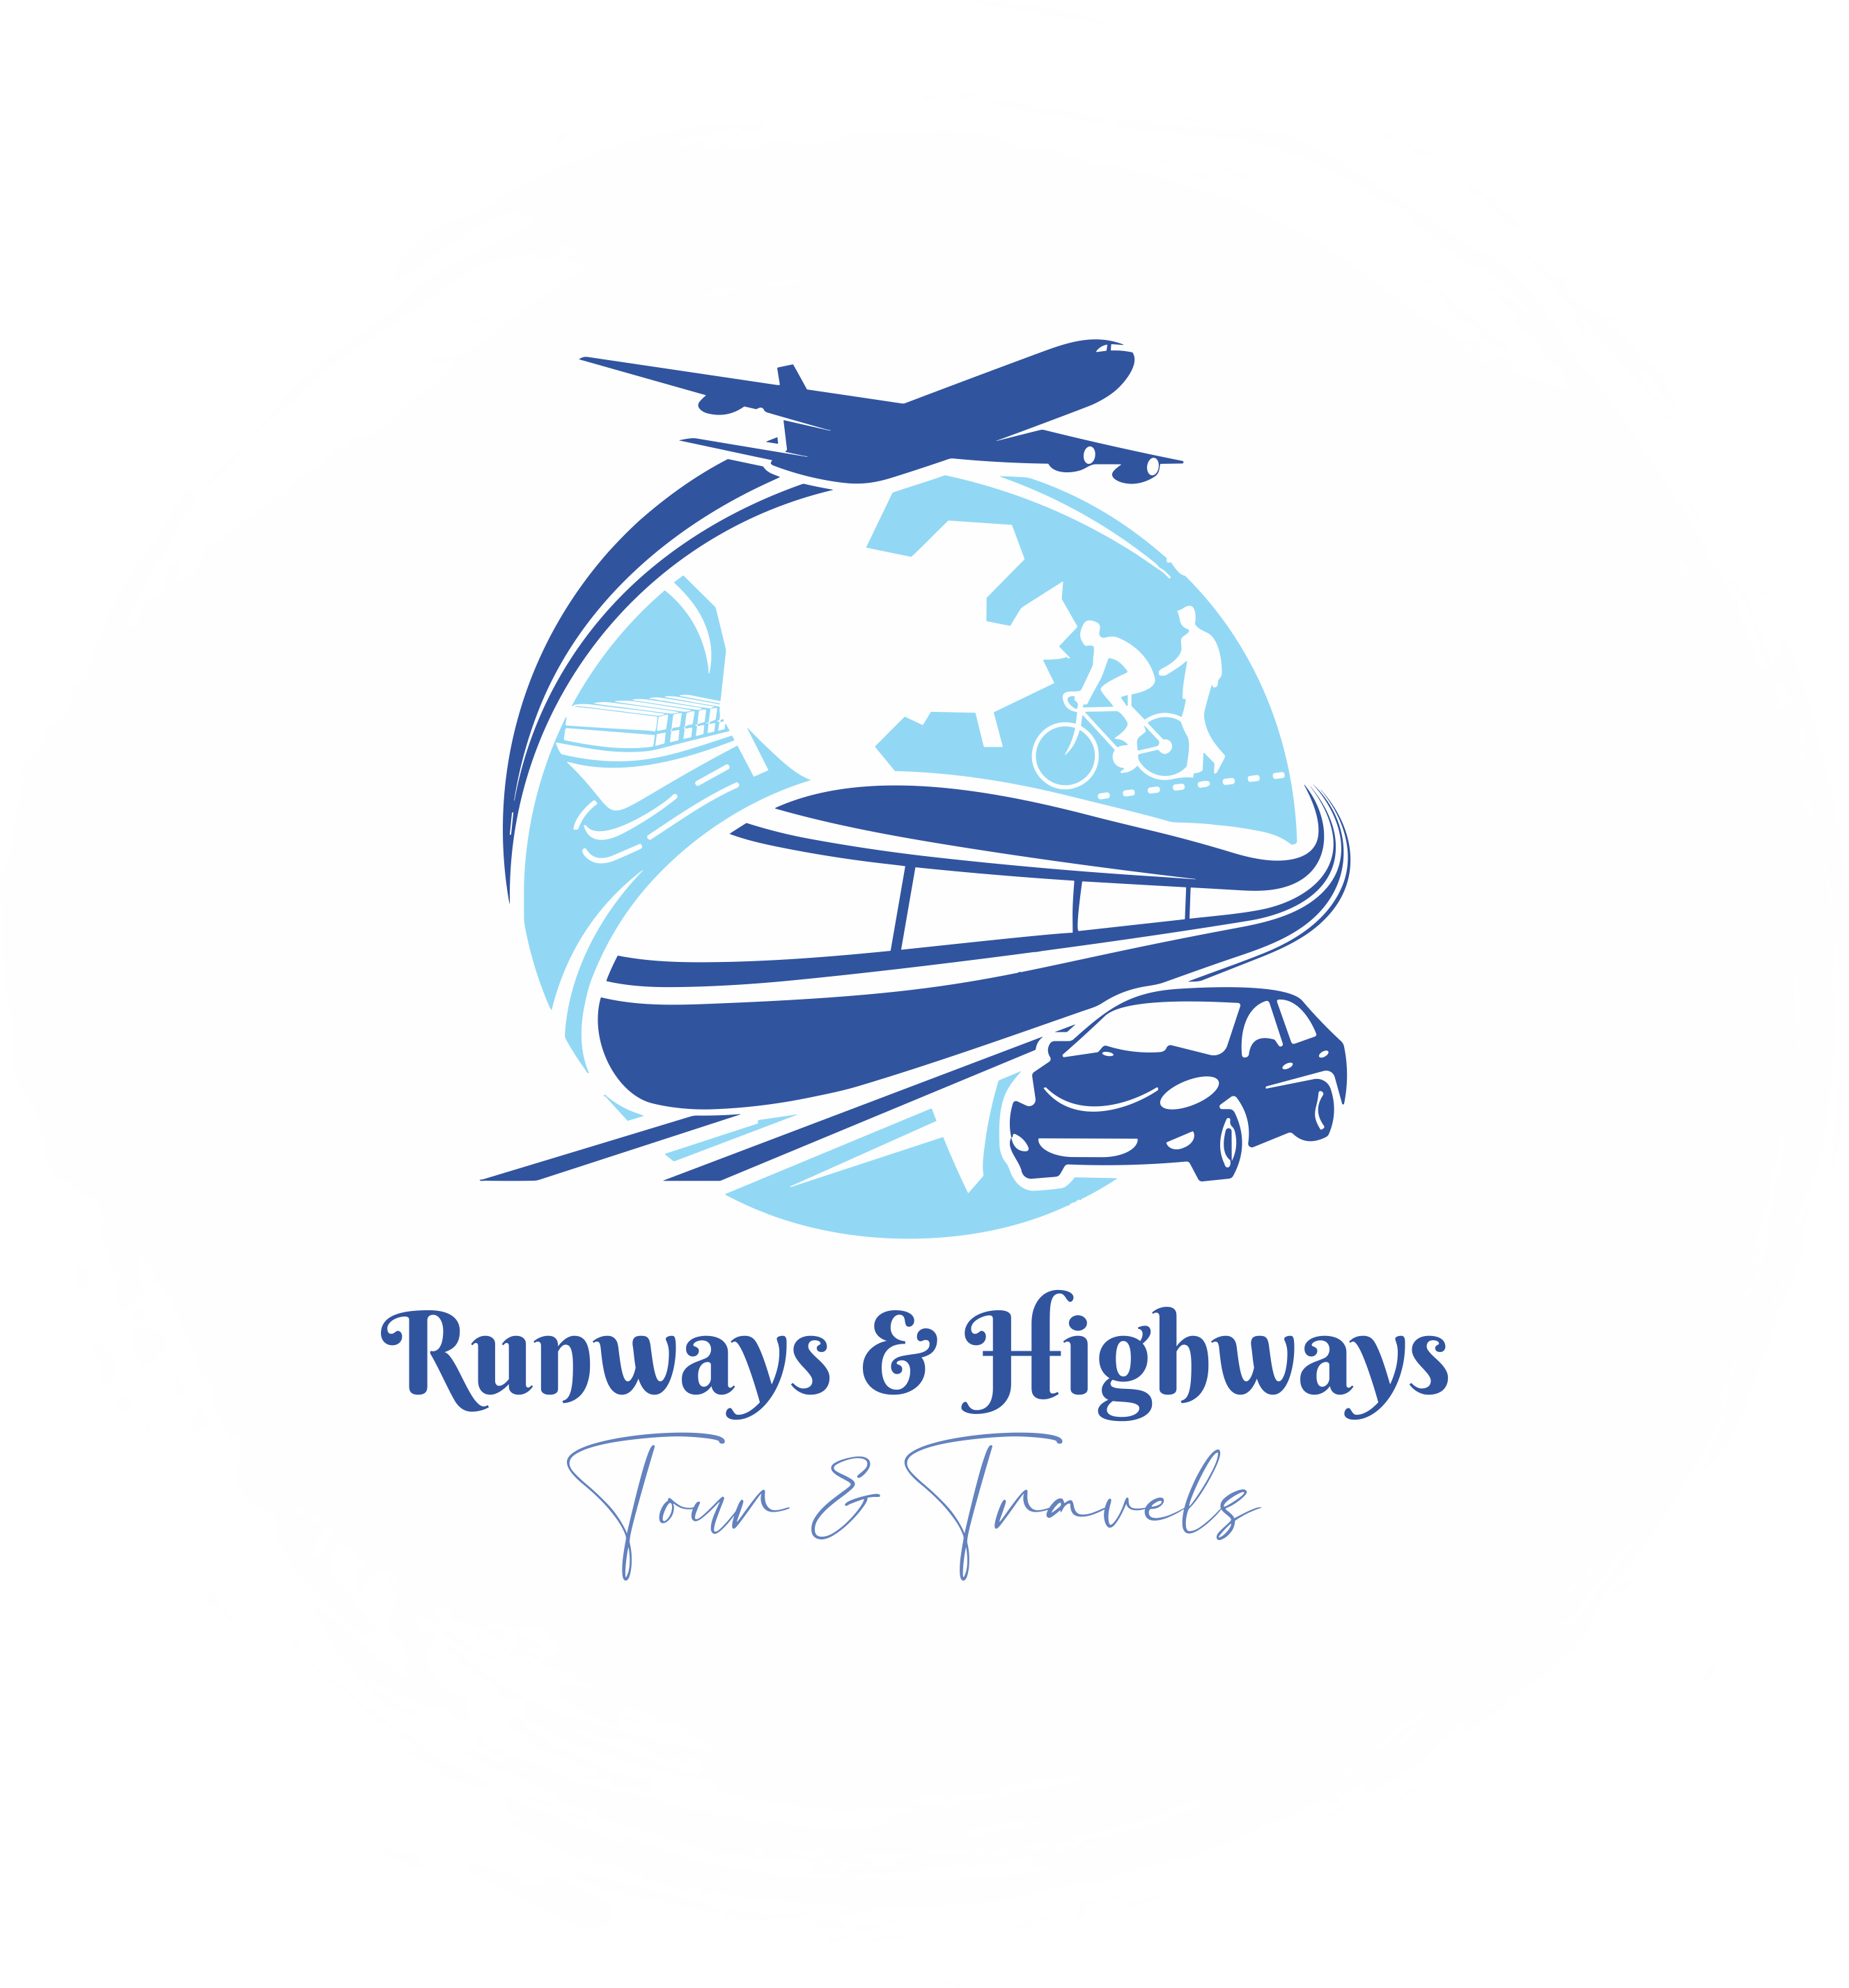 Runways And Highways - Profile, Reviews & Ratings